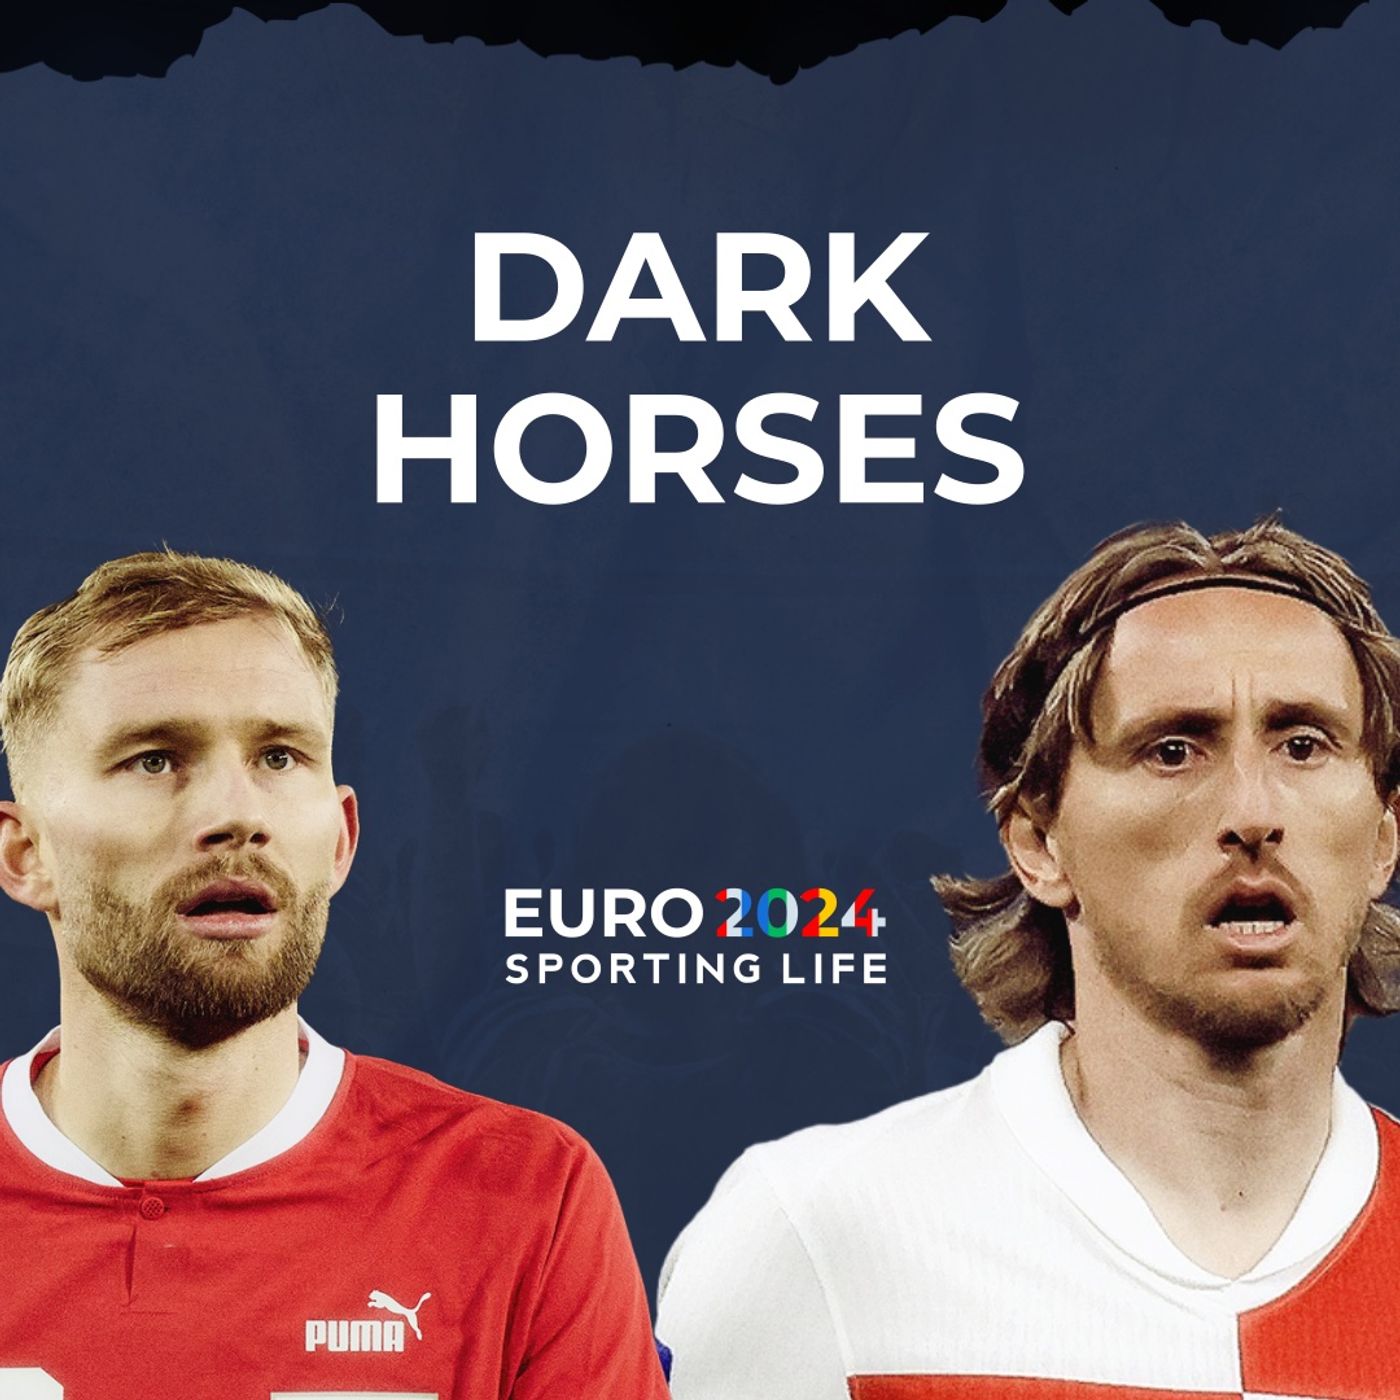 Euro 2024 - Who Are The Dark Horses?